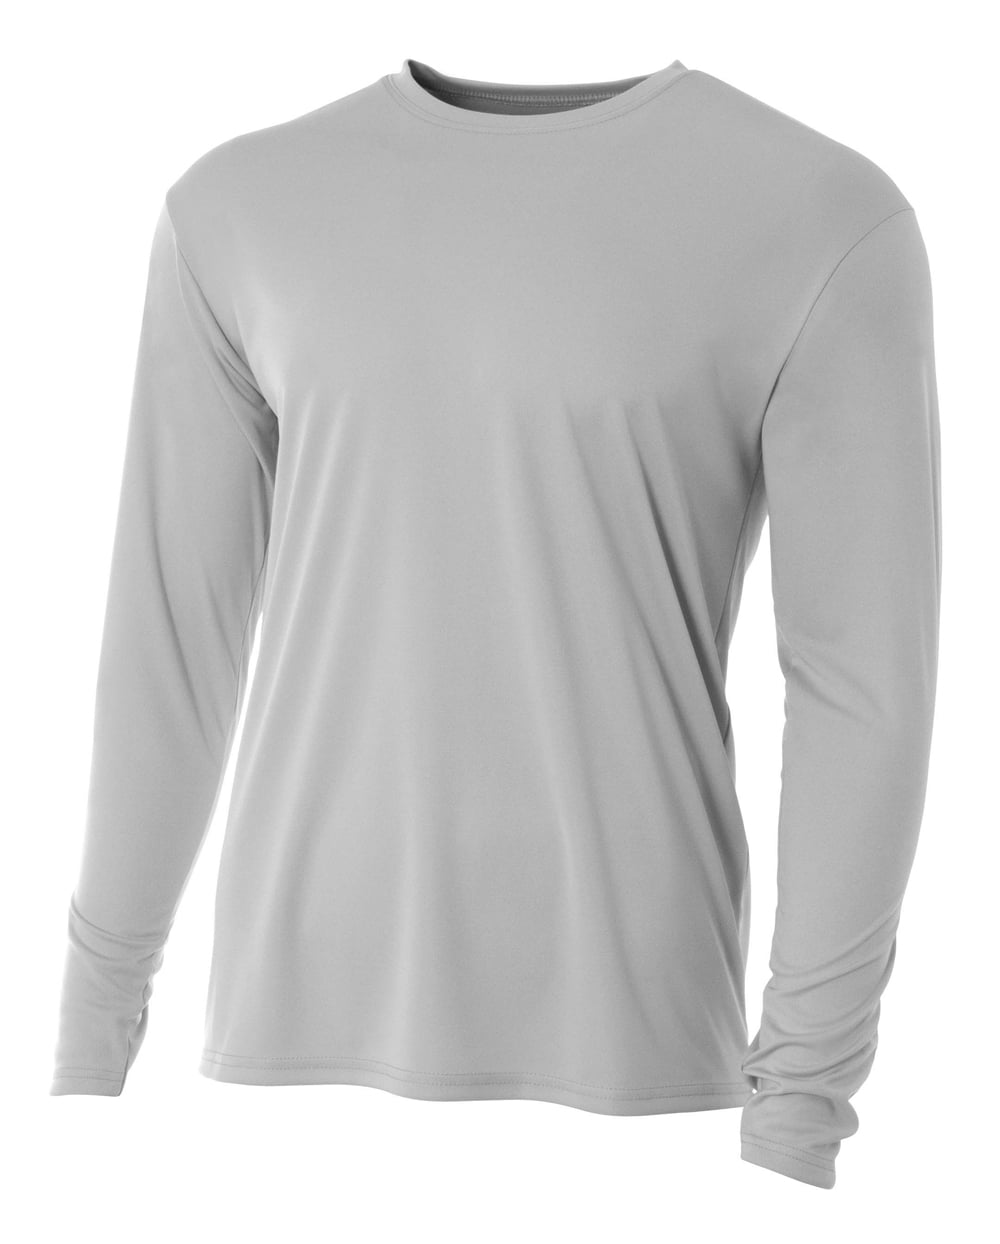 A4 N3165 Men's Cooling Performance Long Sleeve T-Shirt - Black - S